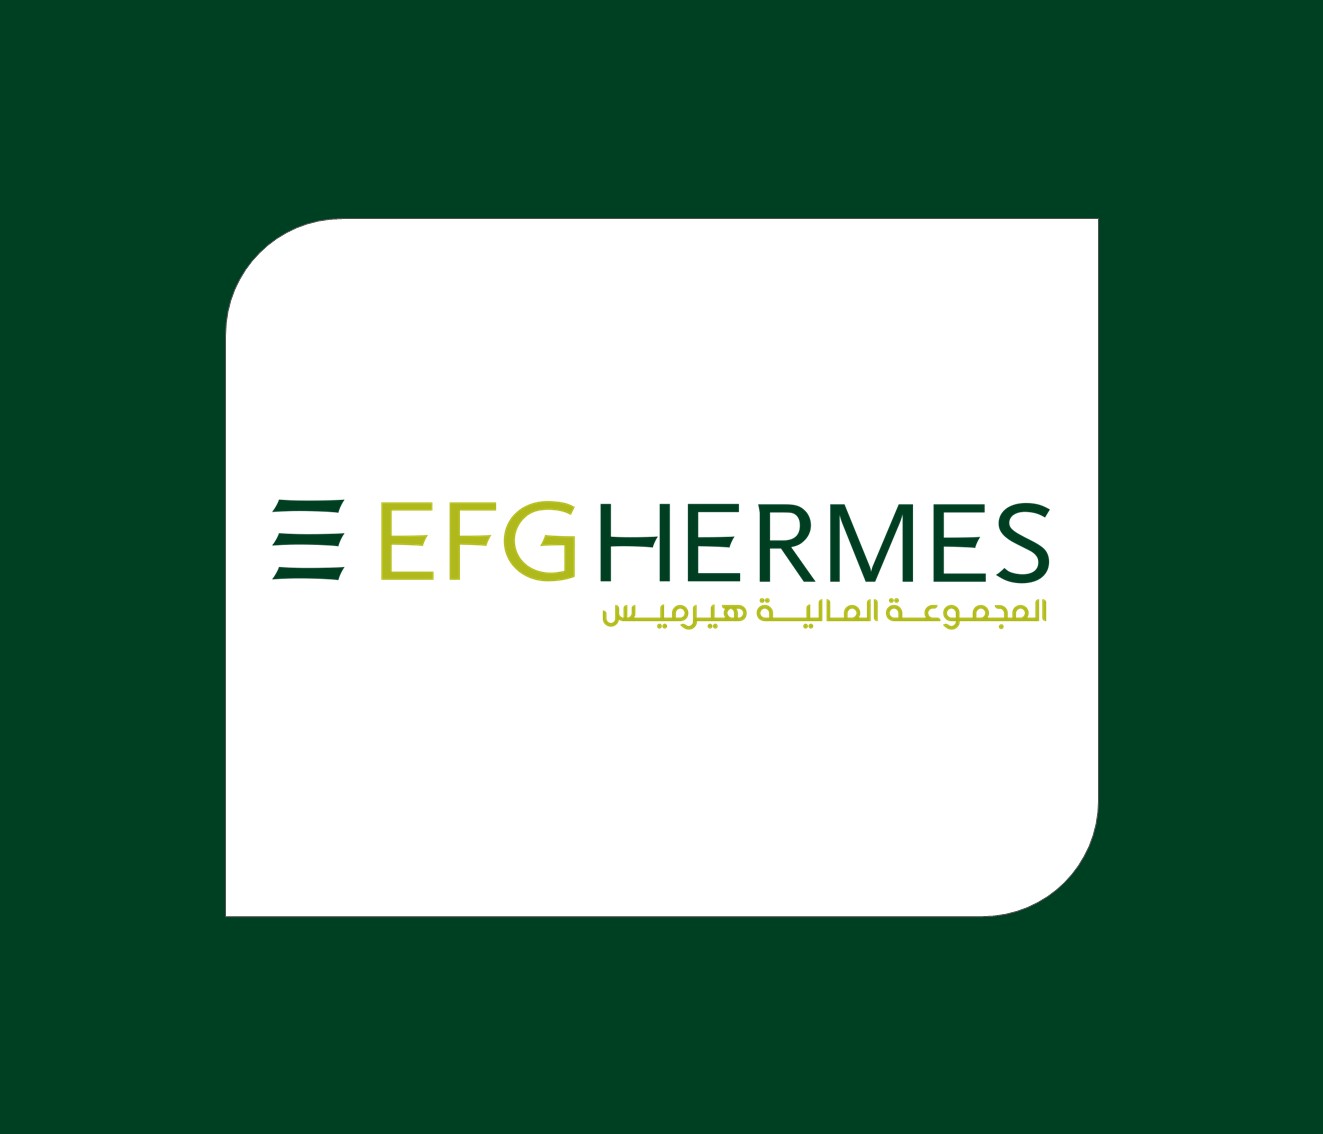 EFG Herms Jobs